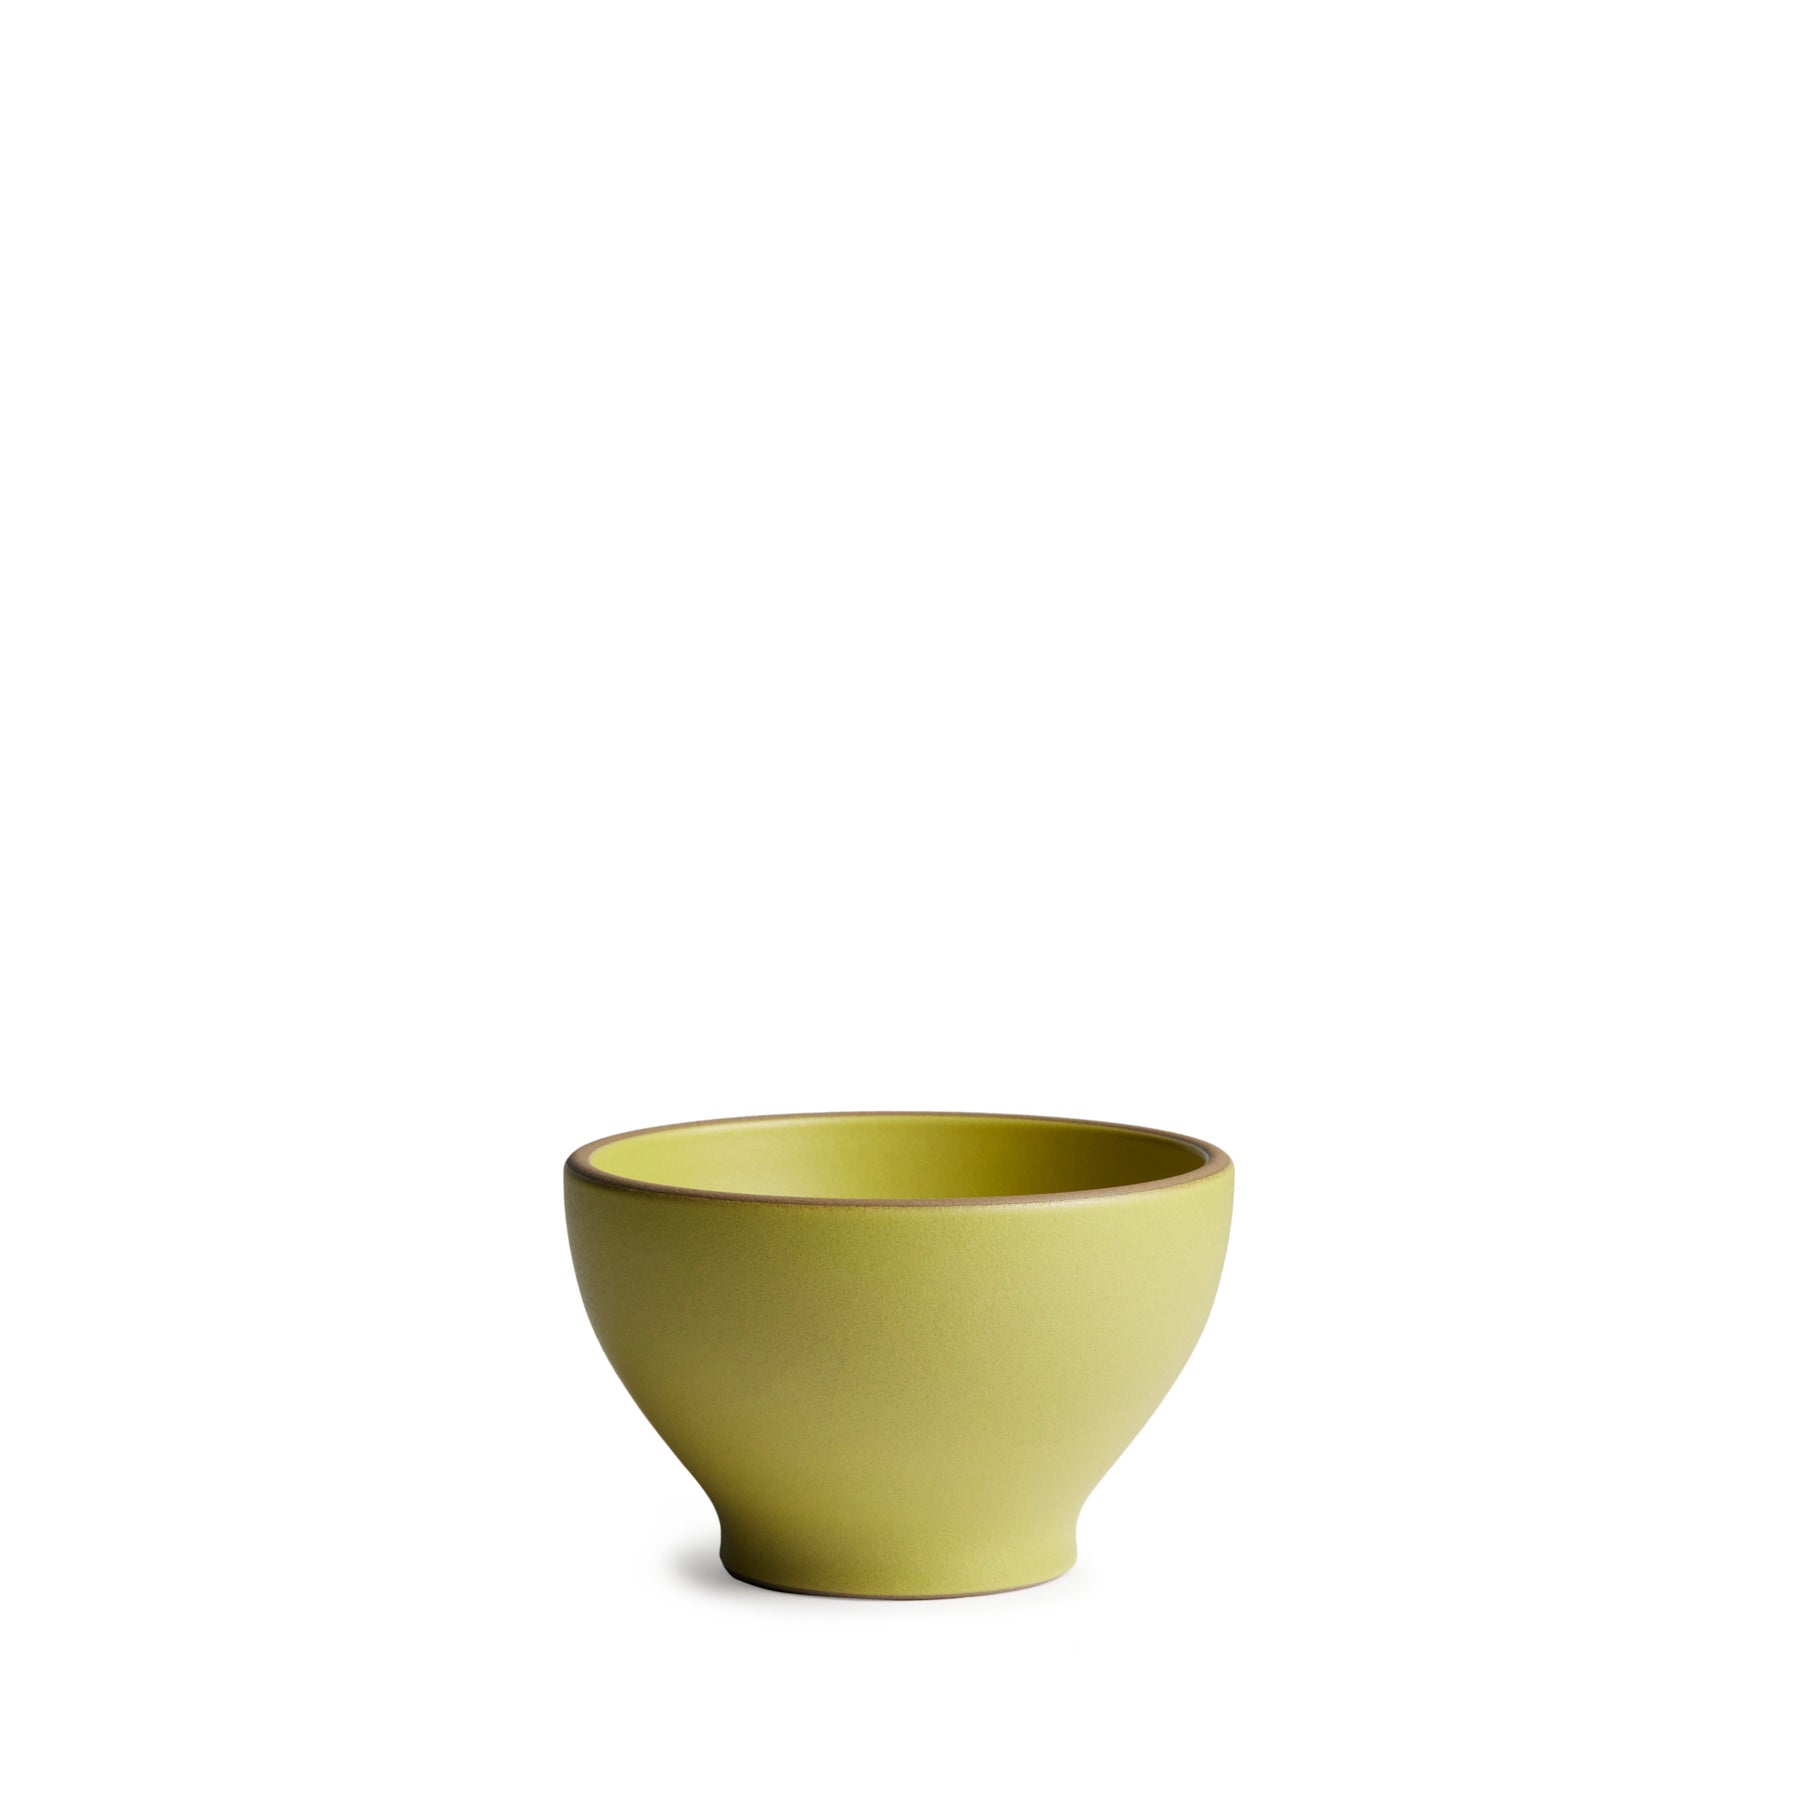 Café Bowl in Avocado Zoom Image 1